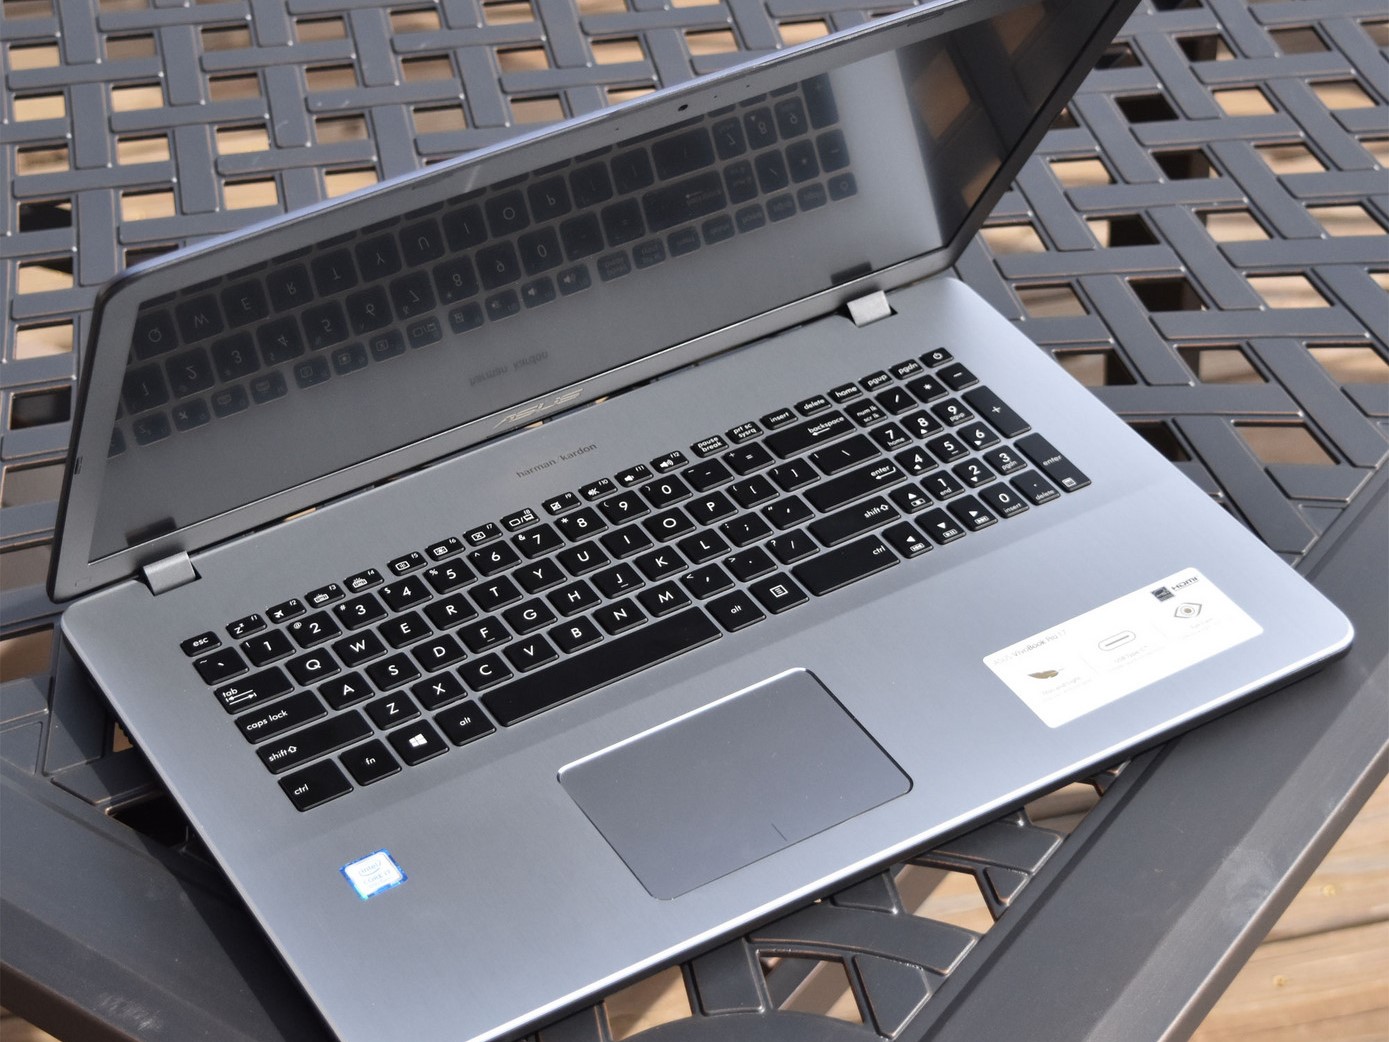 vertaler cel Achterhouden Asus VivoBook Pro 17 N705UD (i7-8550U, GTX 1050) Laptop Review -  NotebookCheck.net Reviews